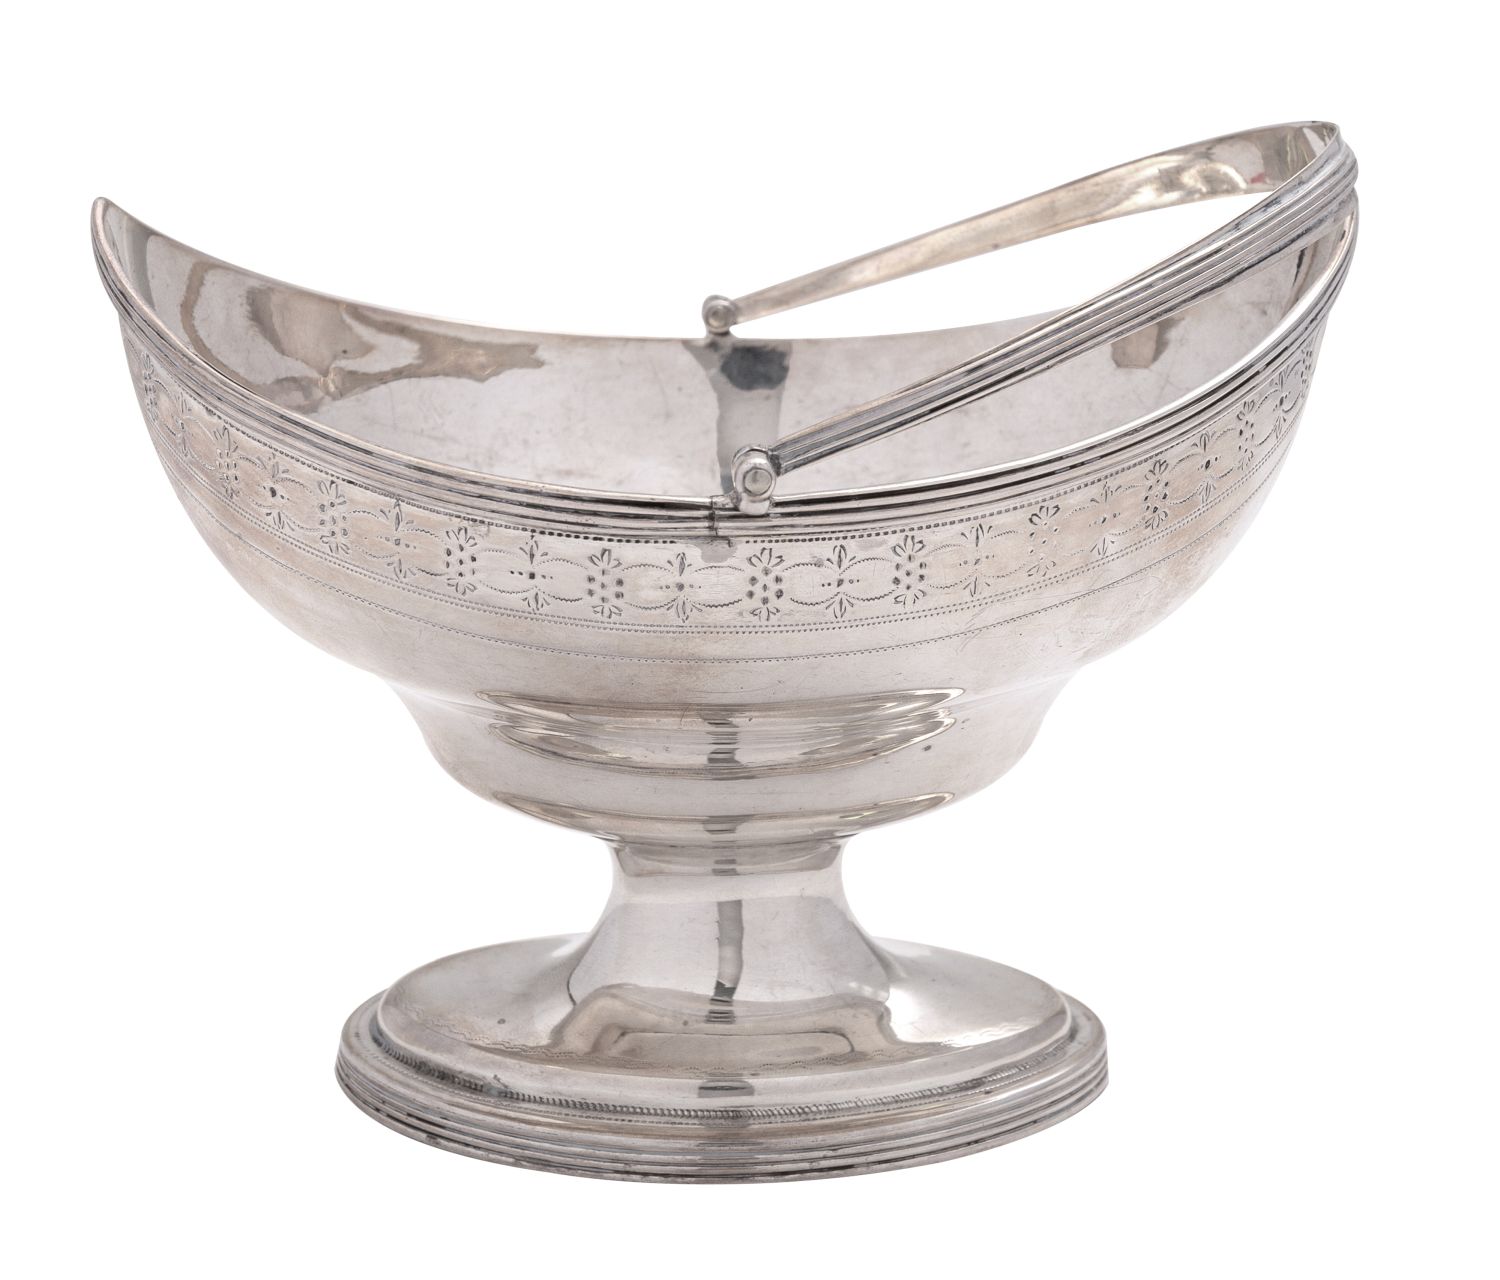 A George III silver swing-handled sugar basket by Peter and Ann Bateman, London 1793, - Image 2 of 2